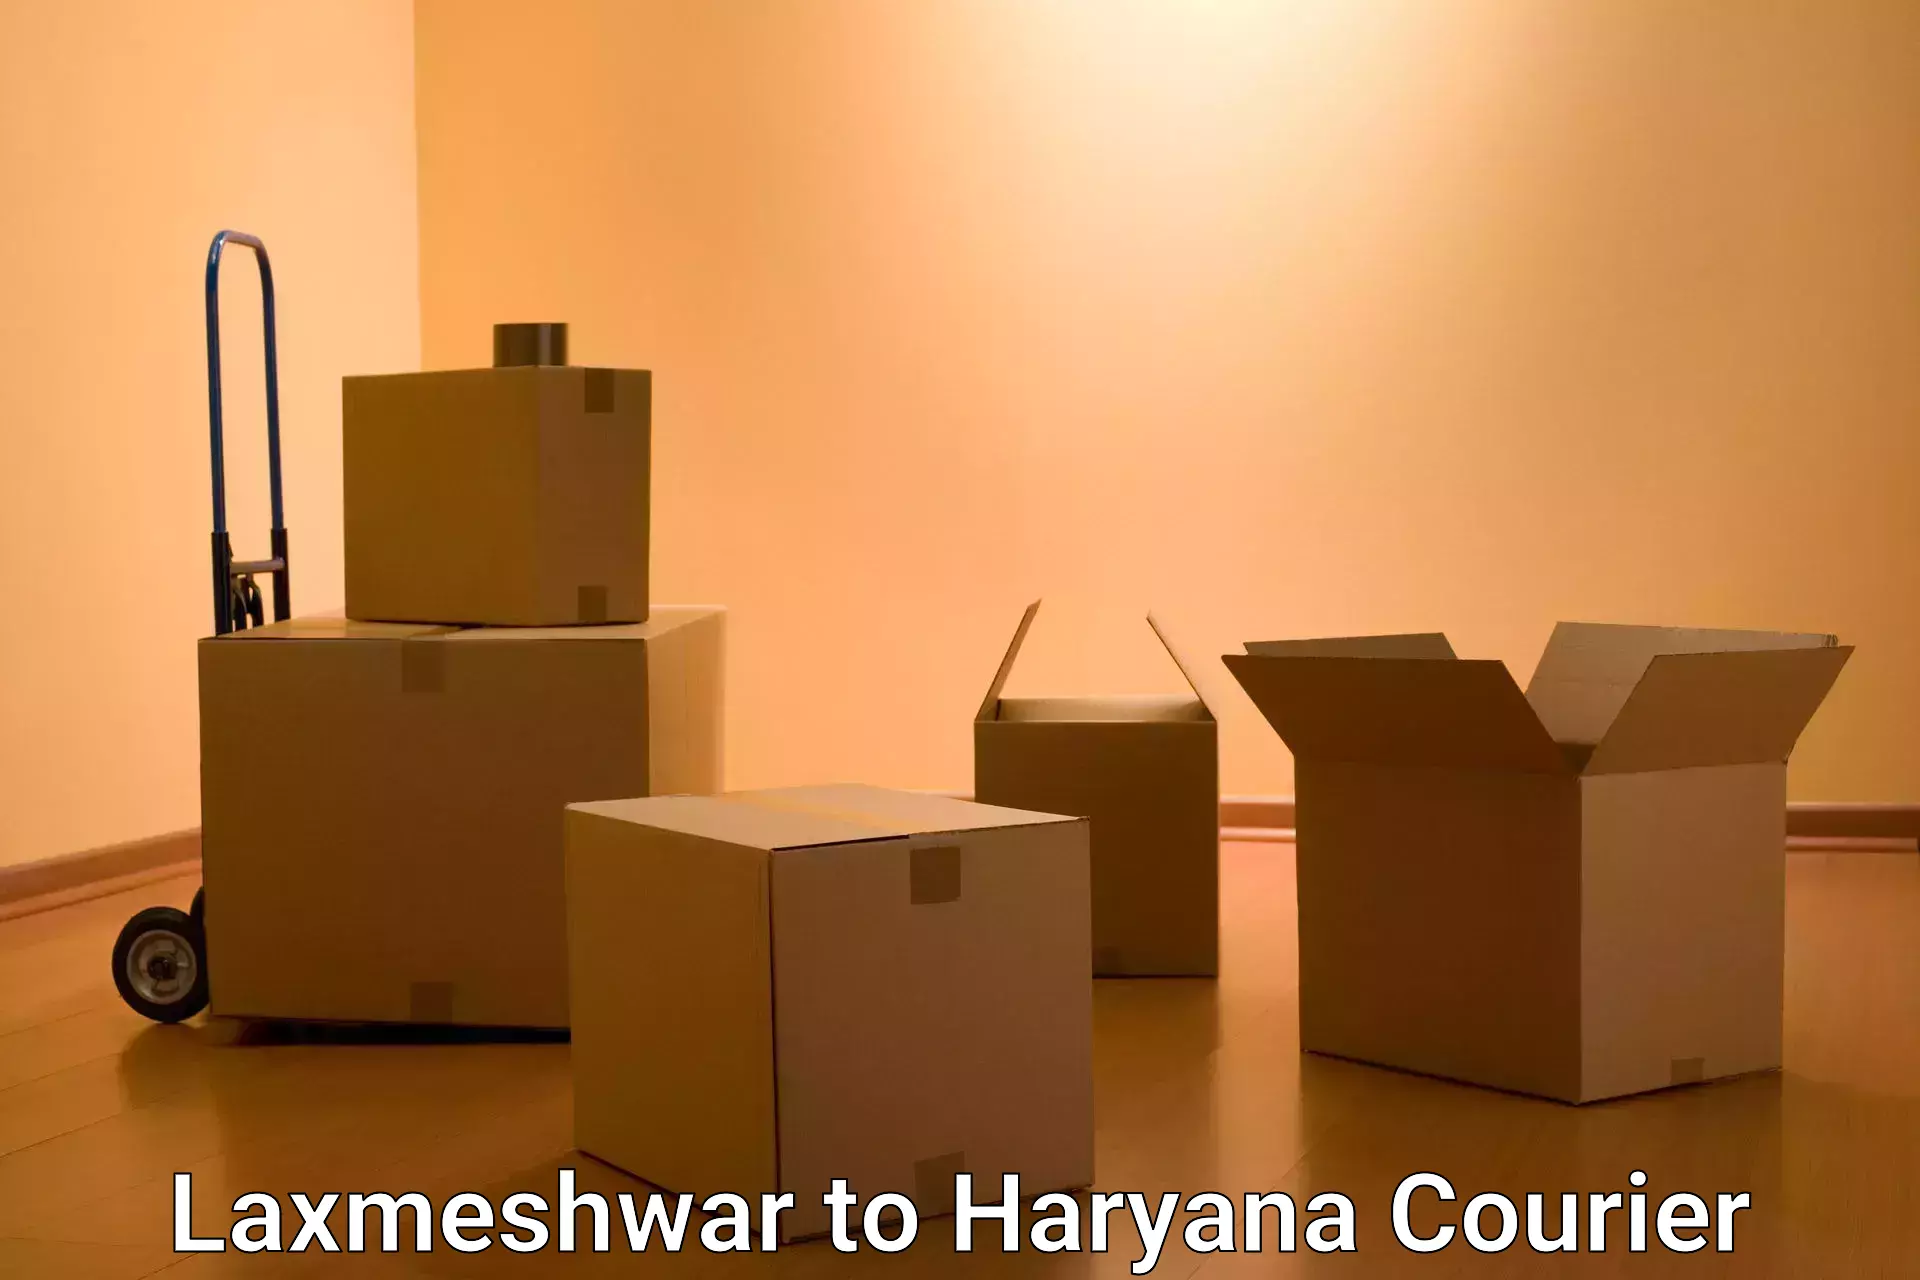 Bulk courier orders Laxmeshwar to Gurgaon